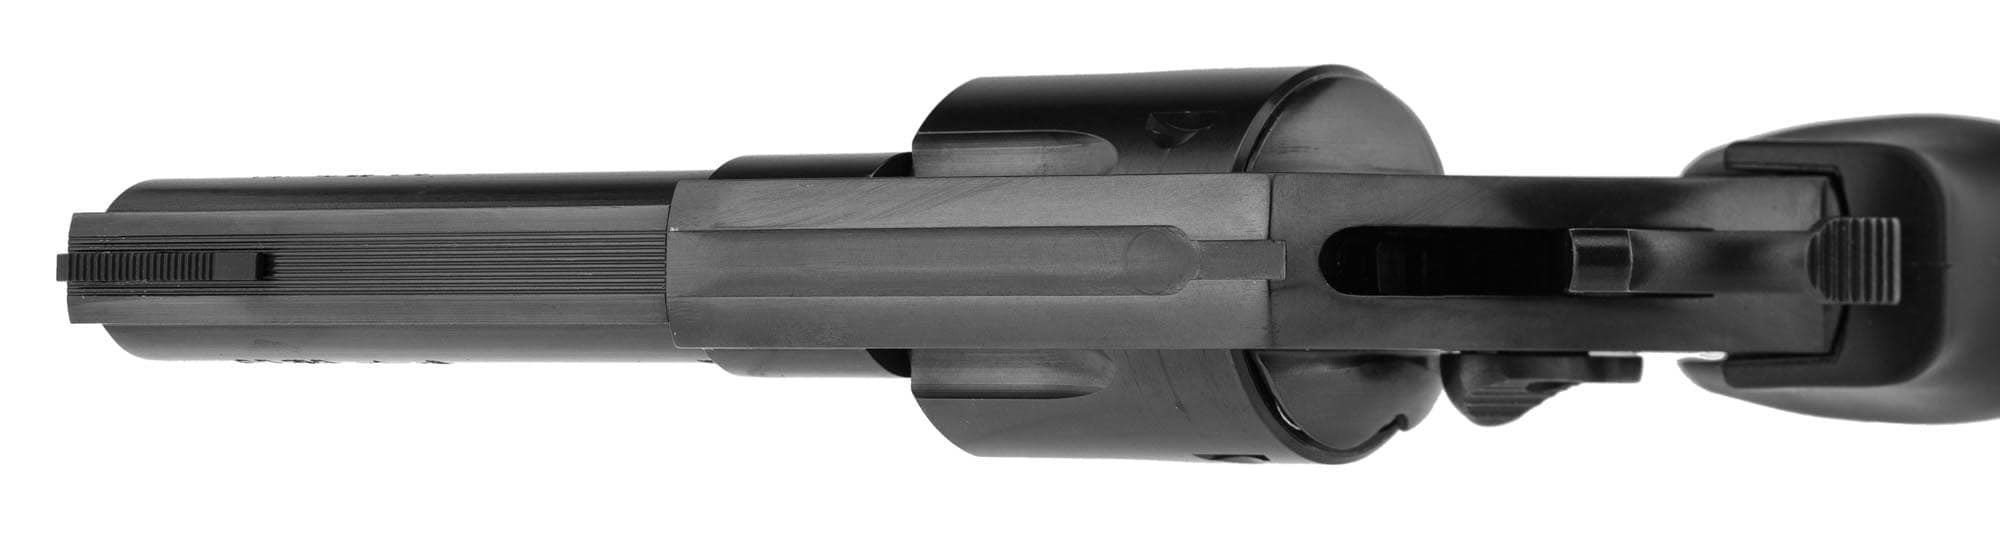 AD99711-7-Revolver ALFA PROJ 4 cal.38 SP Inox - AD99711